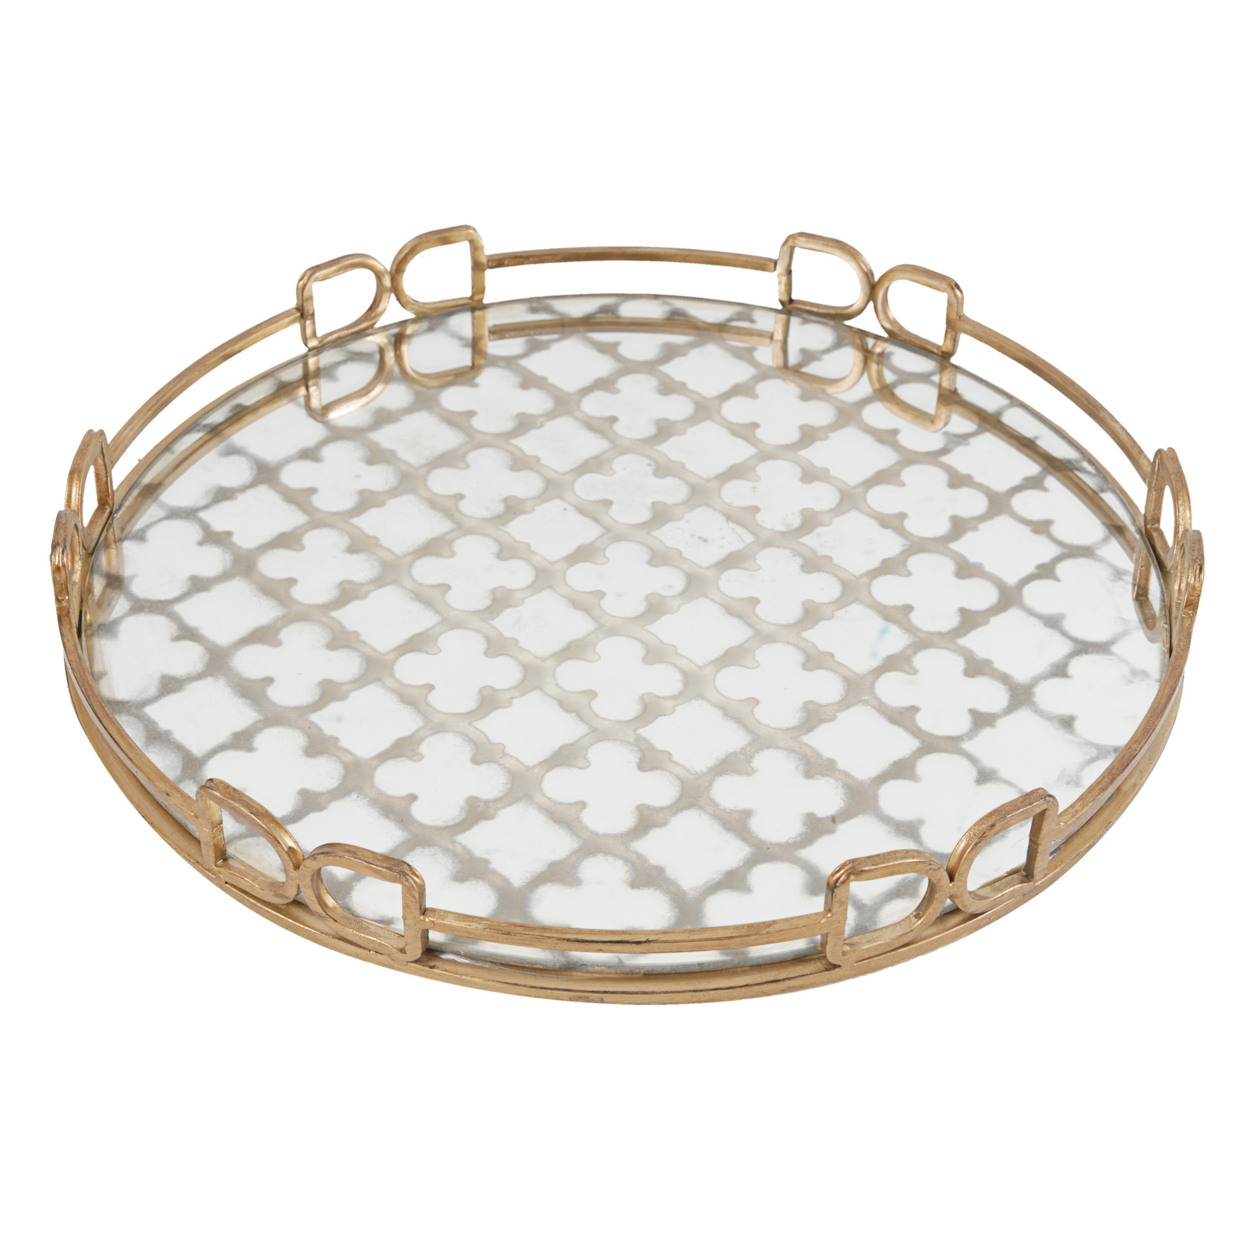 Sui 18 Inch Round Decorative Tray, Glass Bottom And Gold Geometric Frame- Saltoro Sherpi